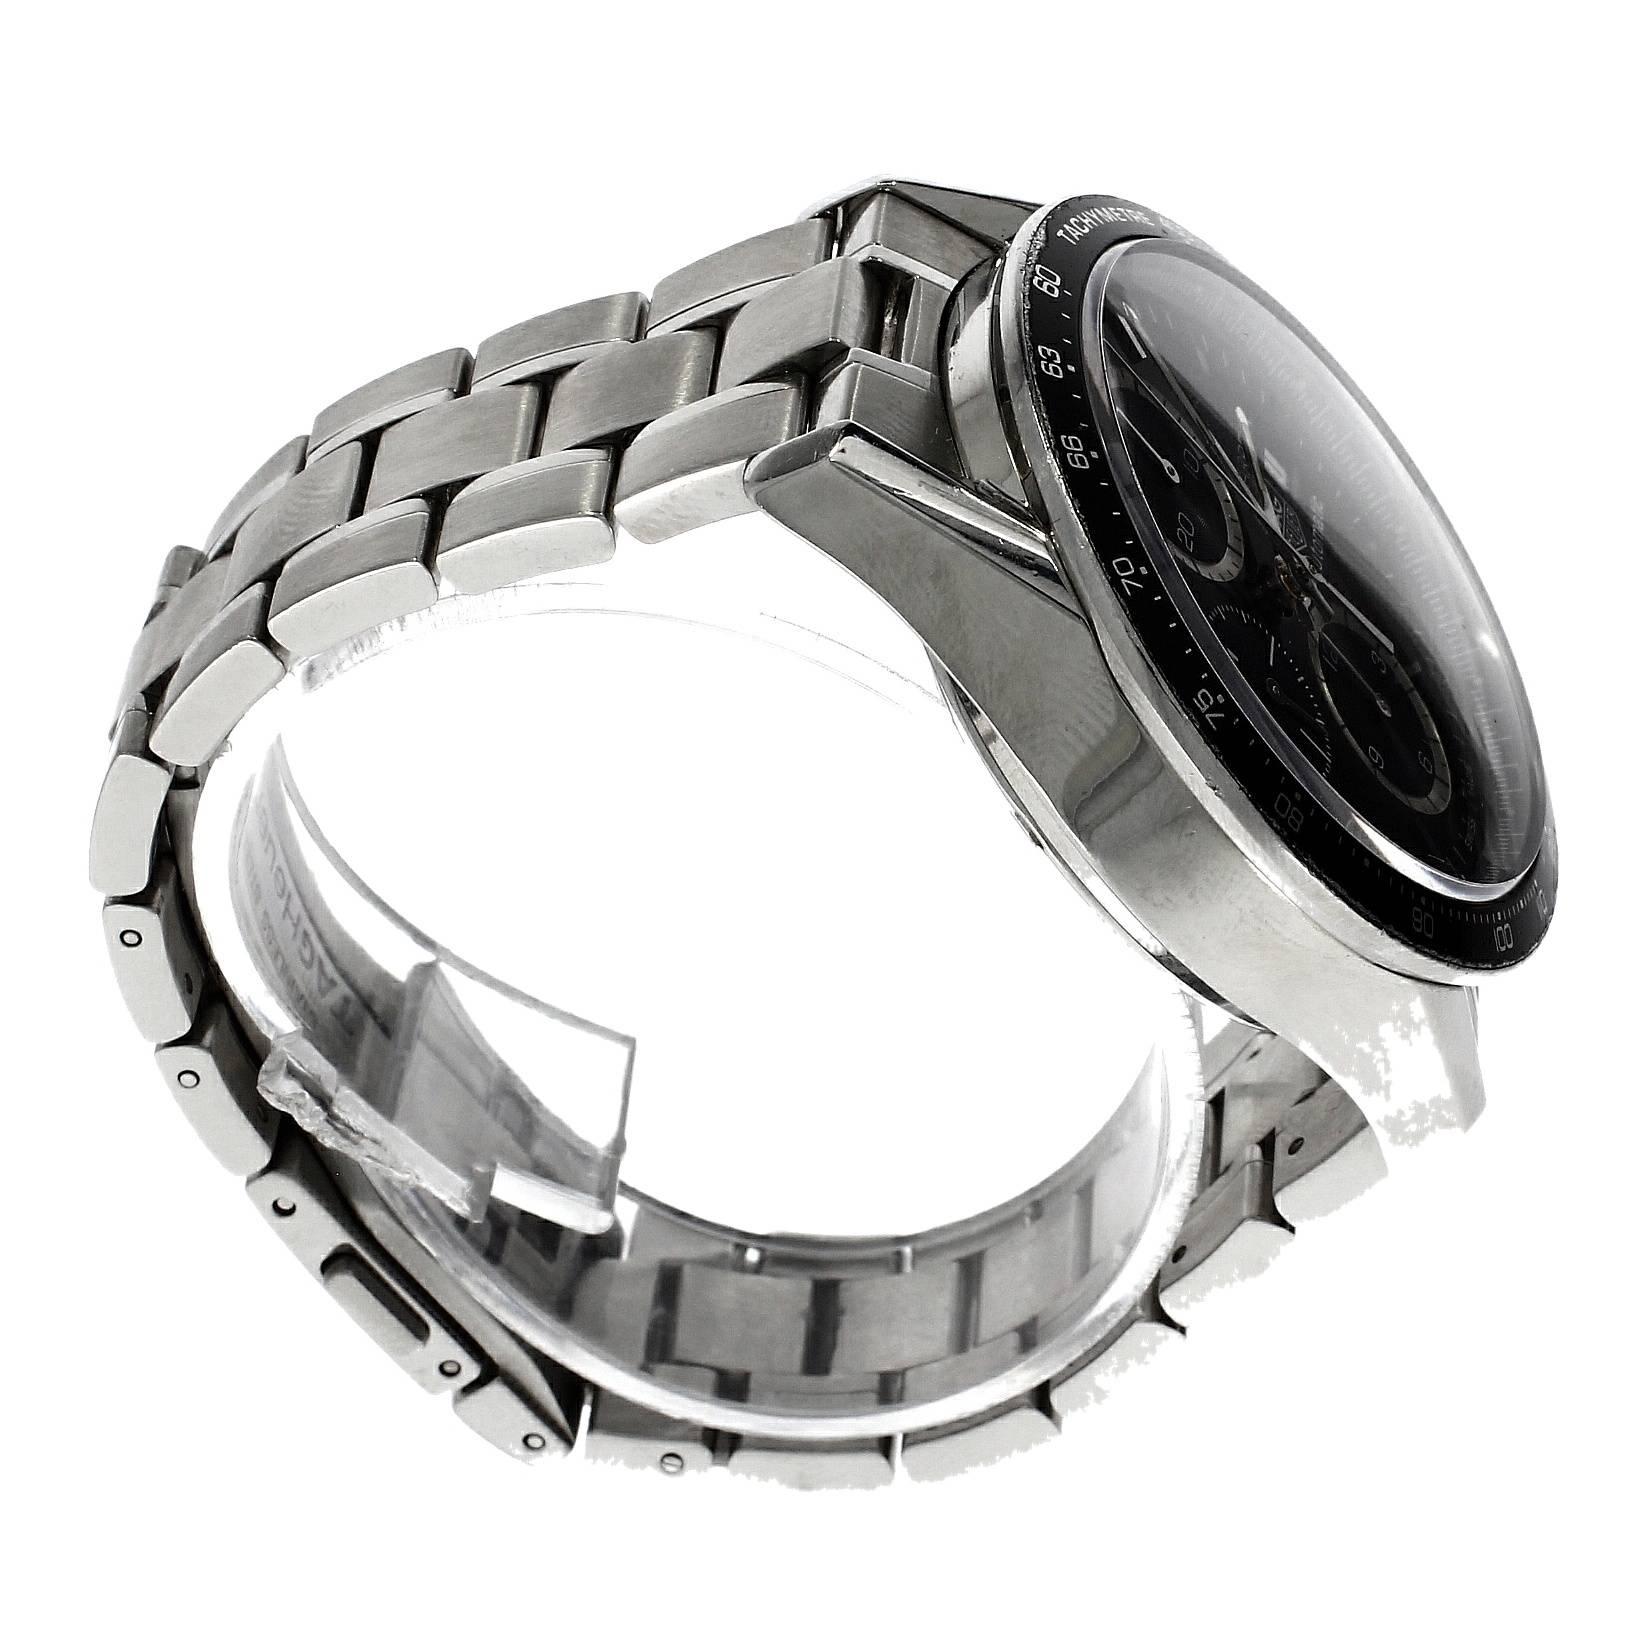 TAG Heuer Stainless Steel Carrera Wristwatch Ref Cv2010 3